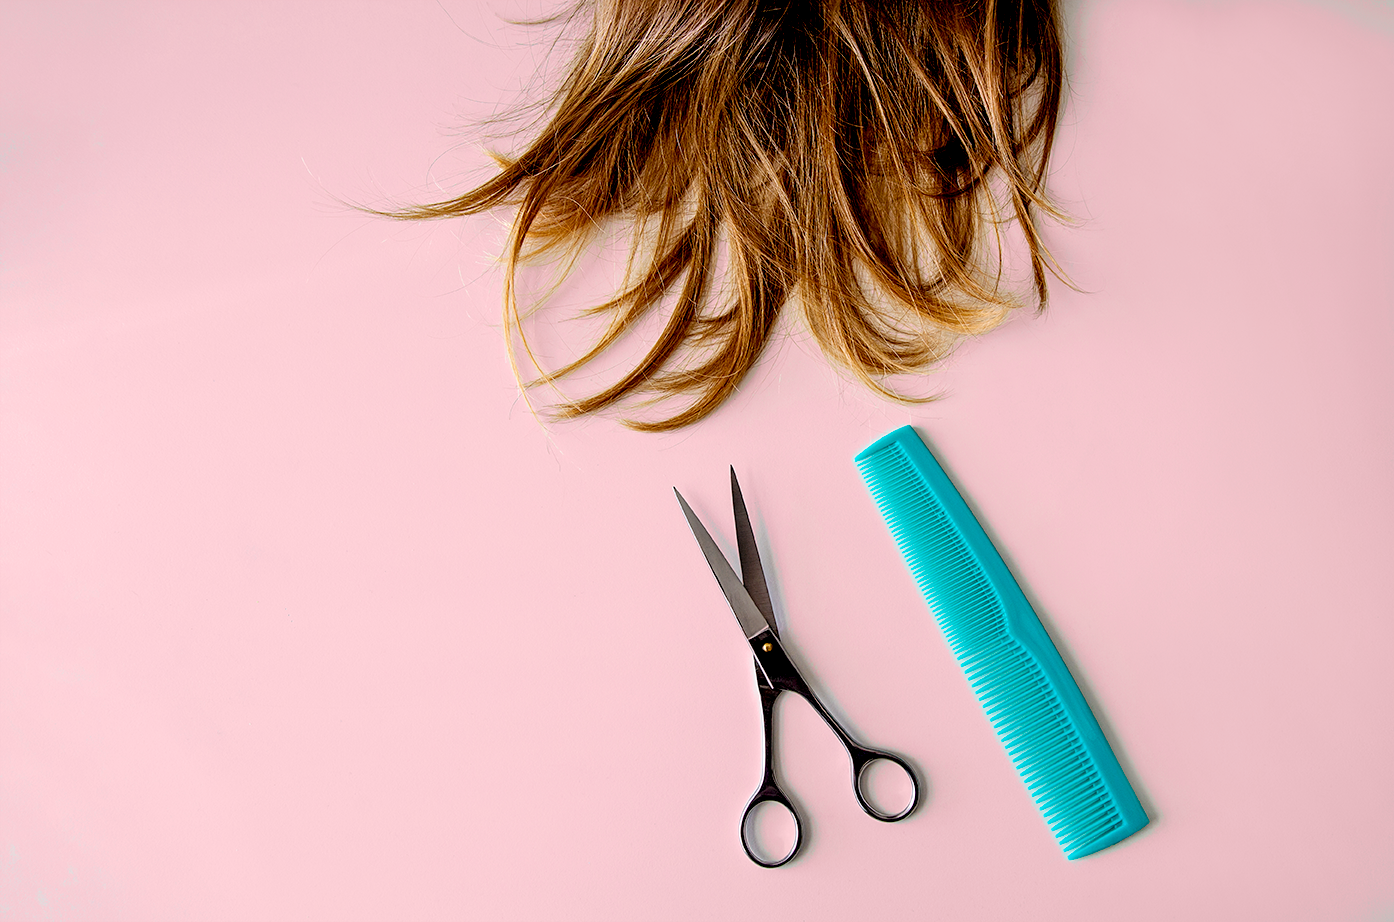 women's self hair cutting tools